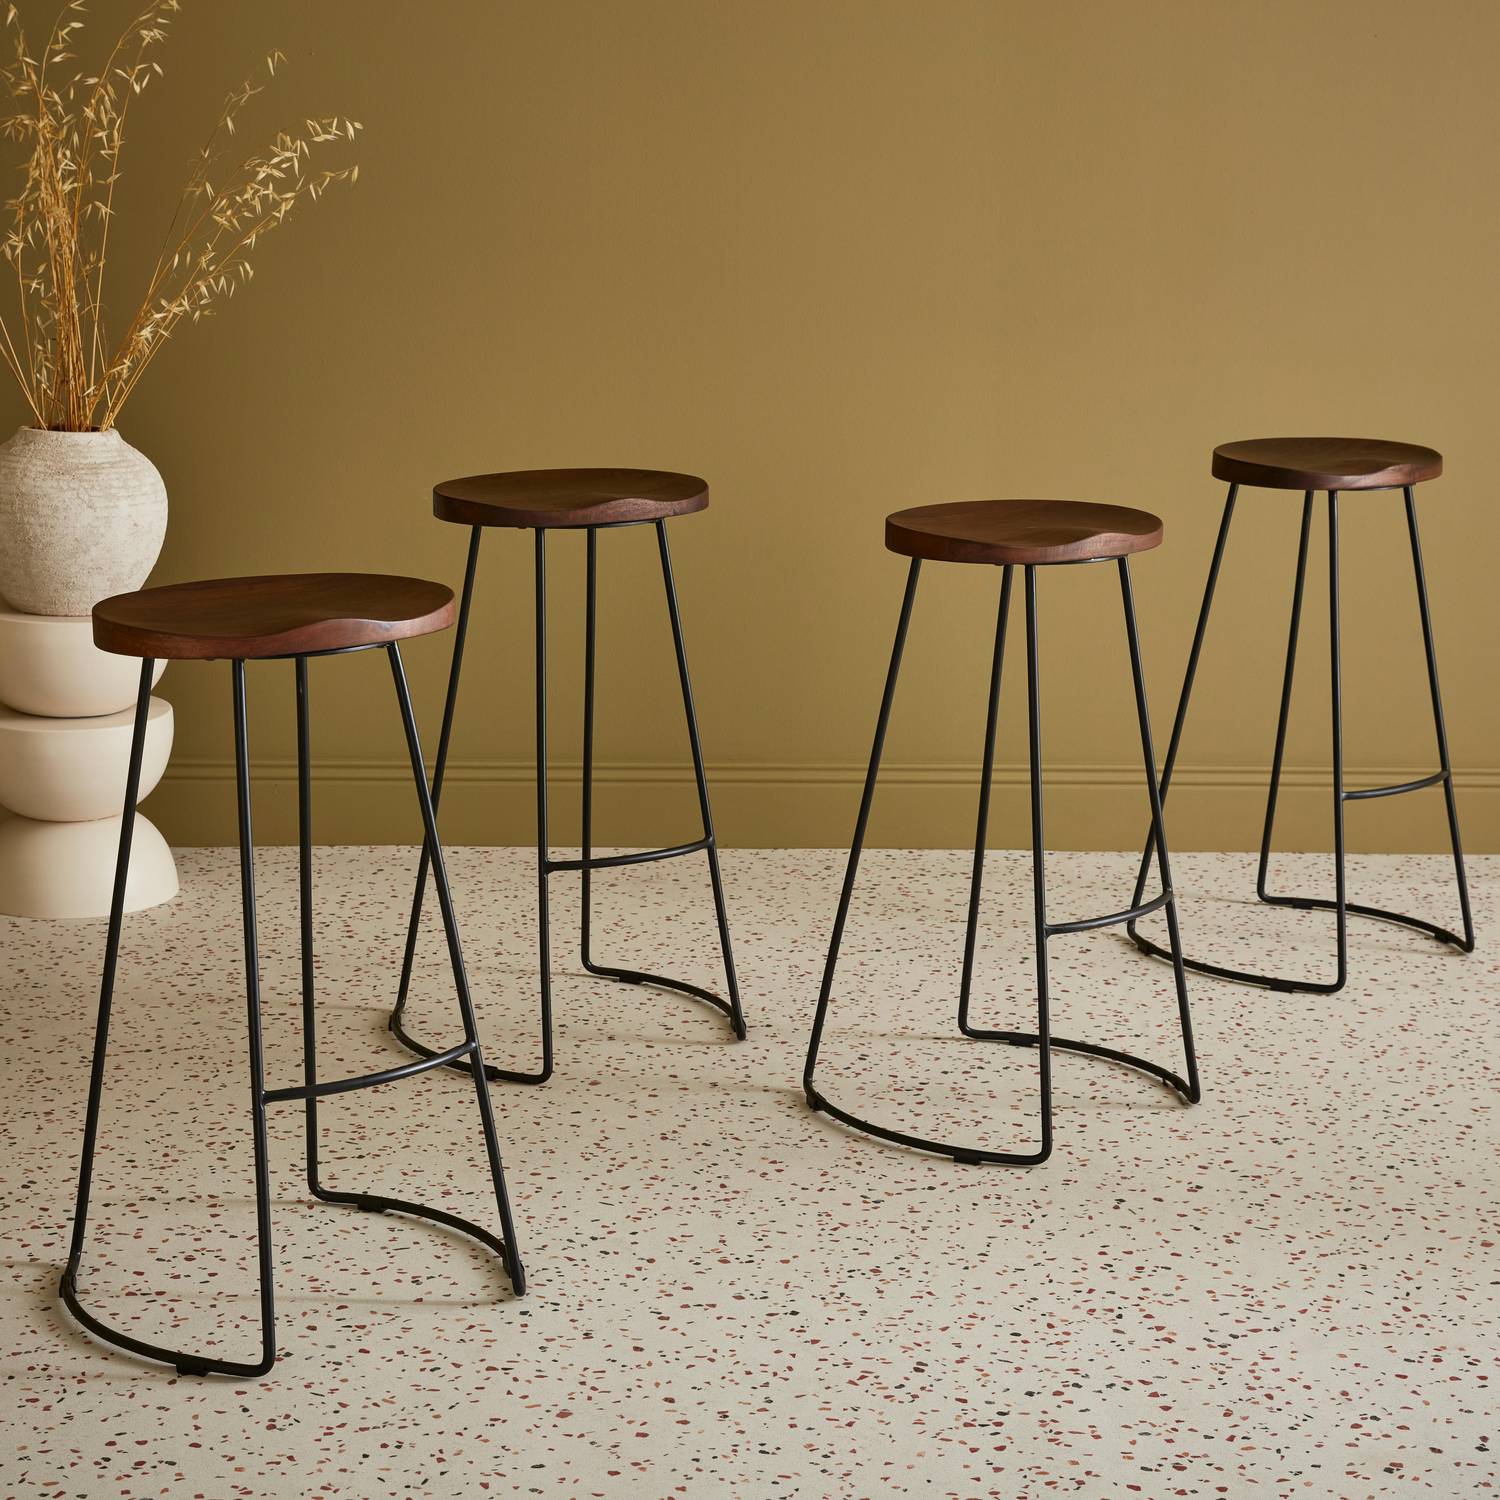 Set of 4 industrial metal and wooden bar stools, 47x40x75cm, Jaya, Light Walnut, Mango wood seat, black metal legs Photo2